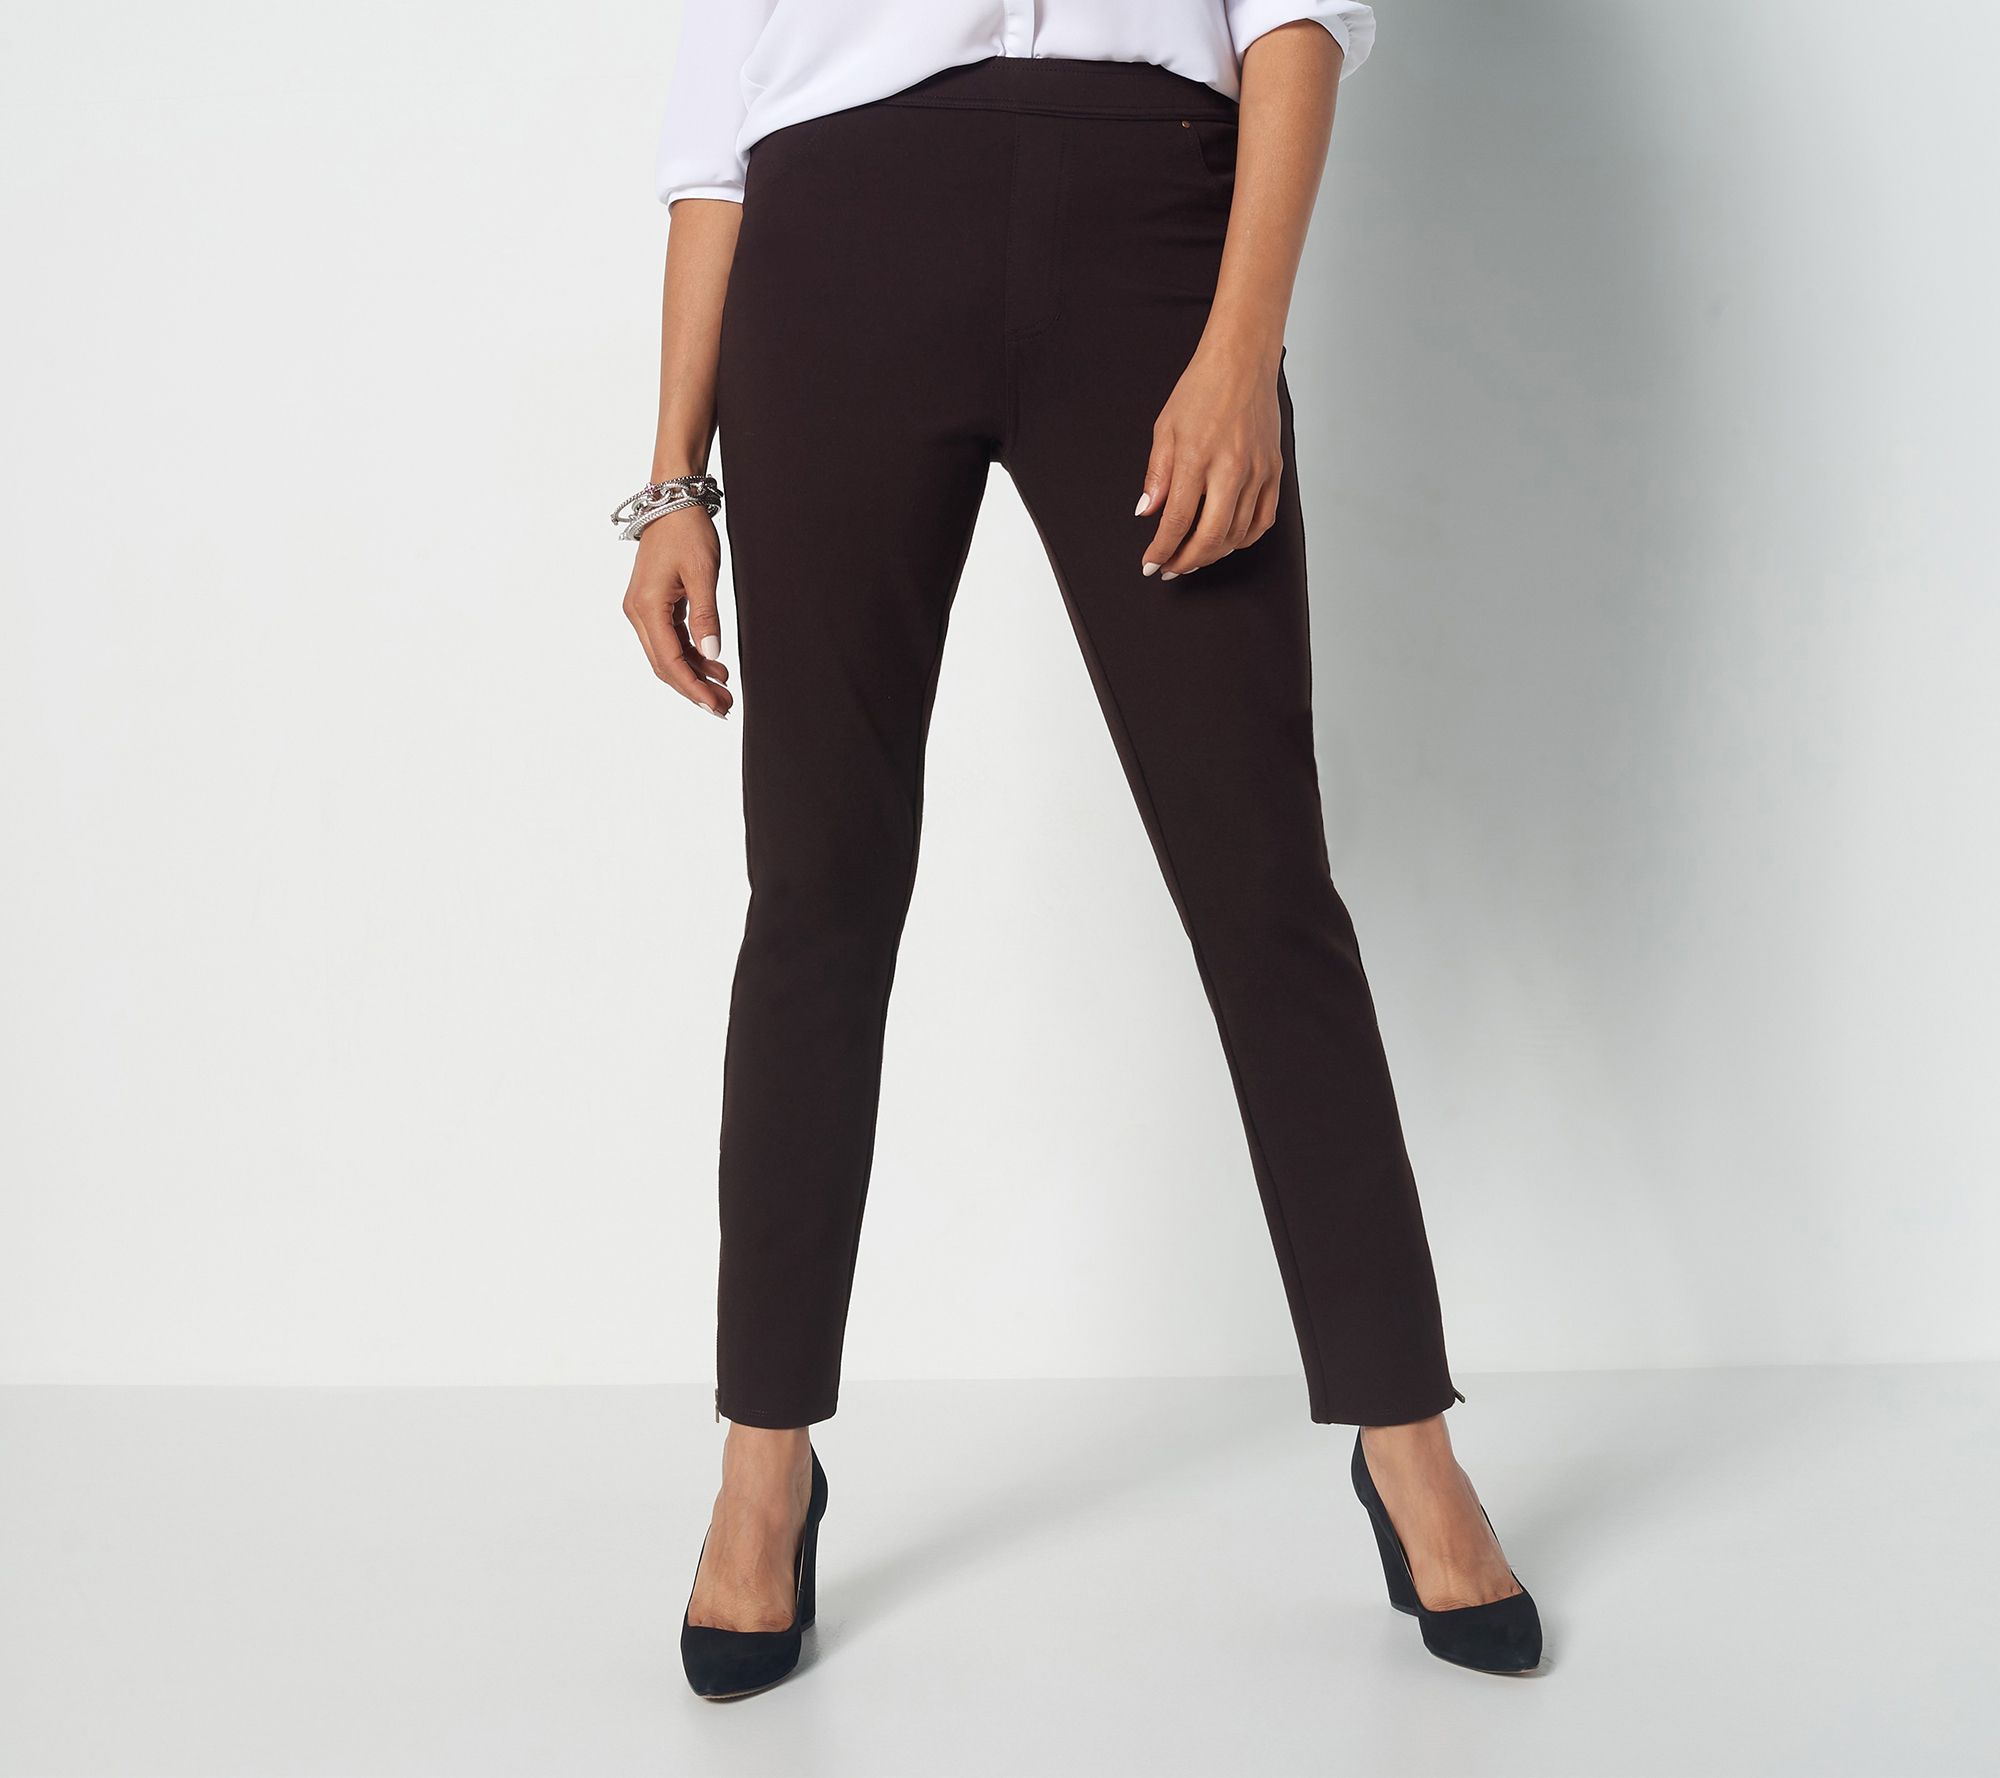 Jennyfer slacks Gray/Red S slim WOMEN FASHION Trousers Slacks Skinny discount 67% 